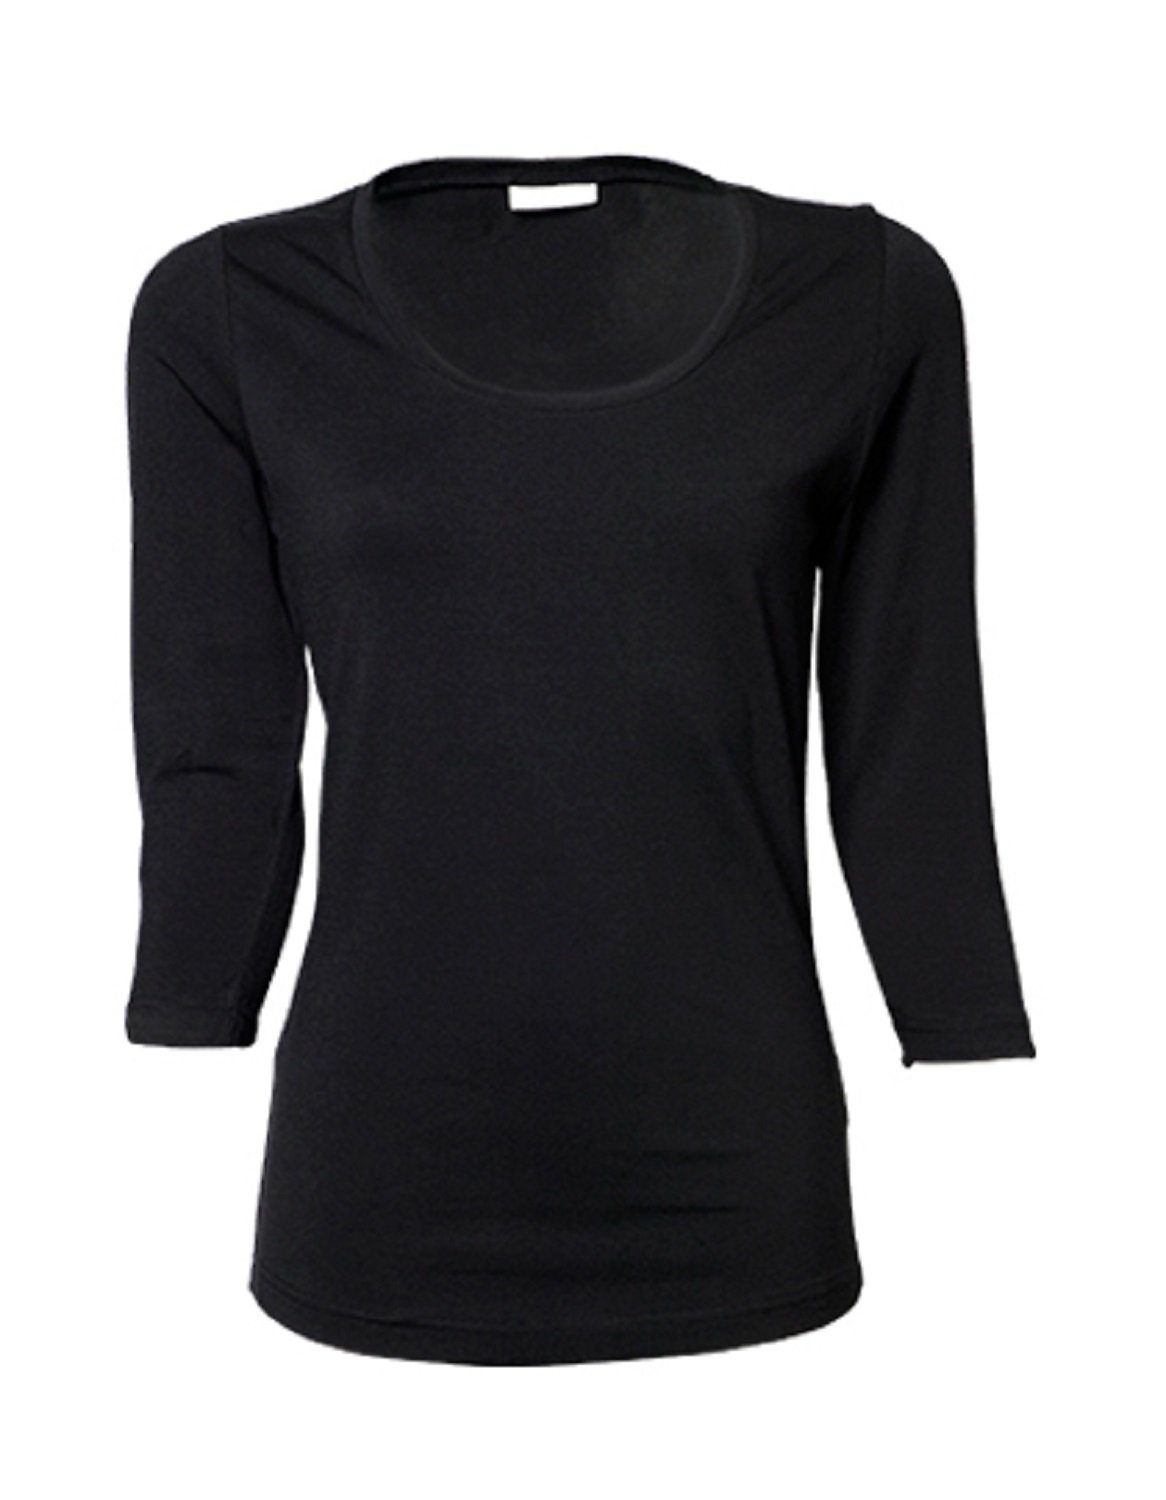 Tee Jays Langarmshirt Stretch Damen Langarmshirt / Langarm Shirt für Frauen - 195 g/m² S bis 3XL